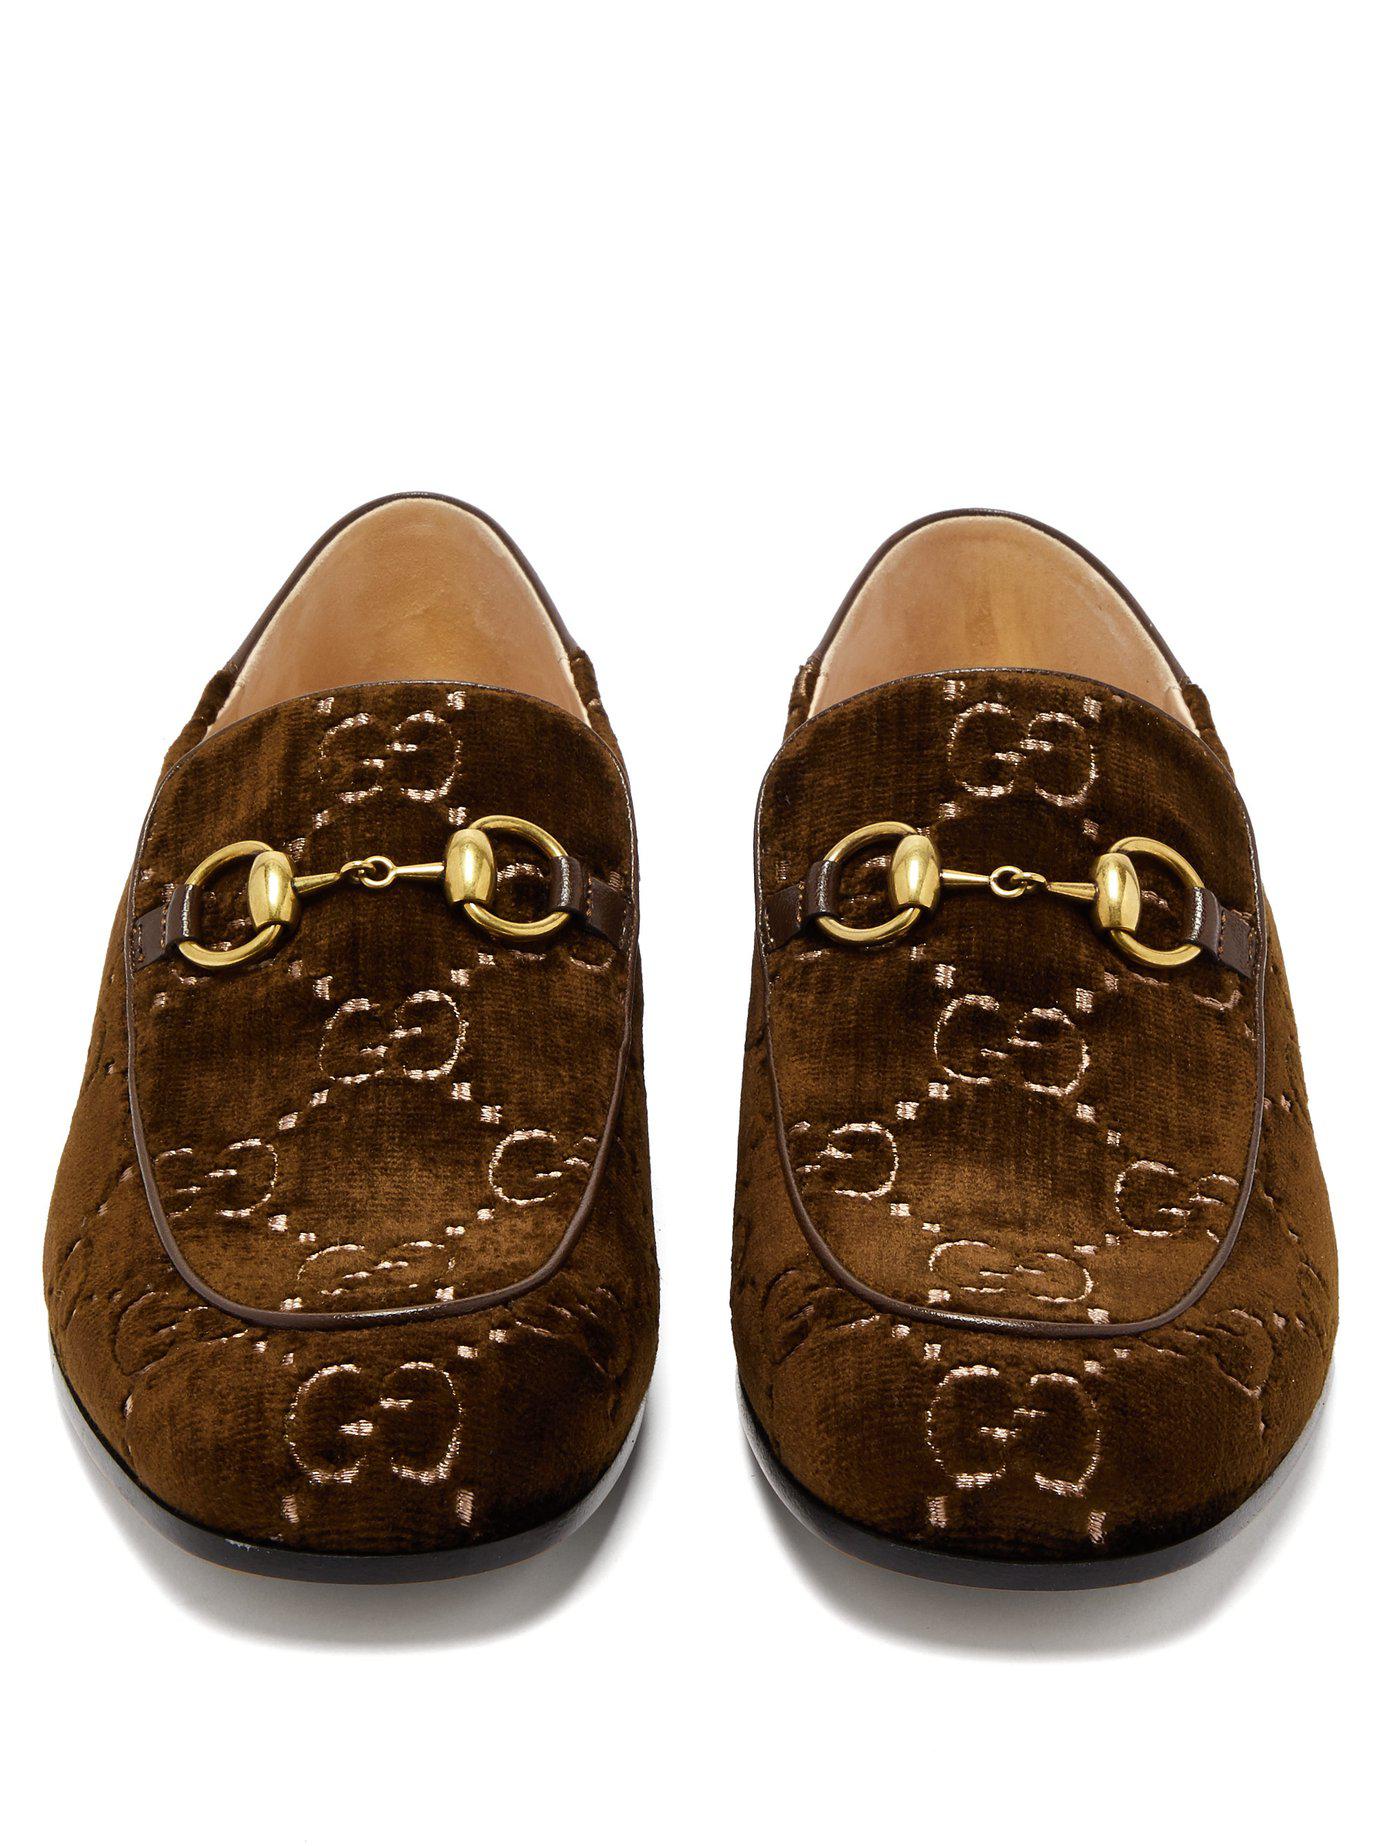 Gucci Mister Gg Crystal Embellished Velvet Loafers in Brown | Lyst